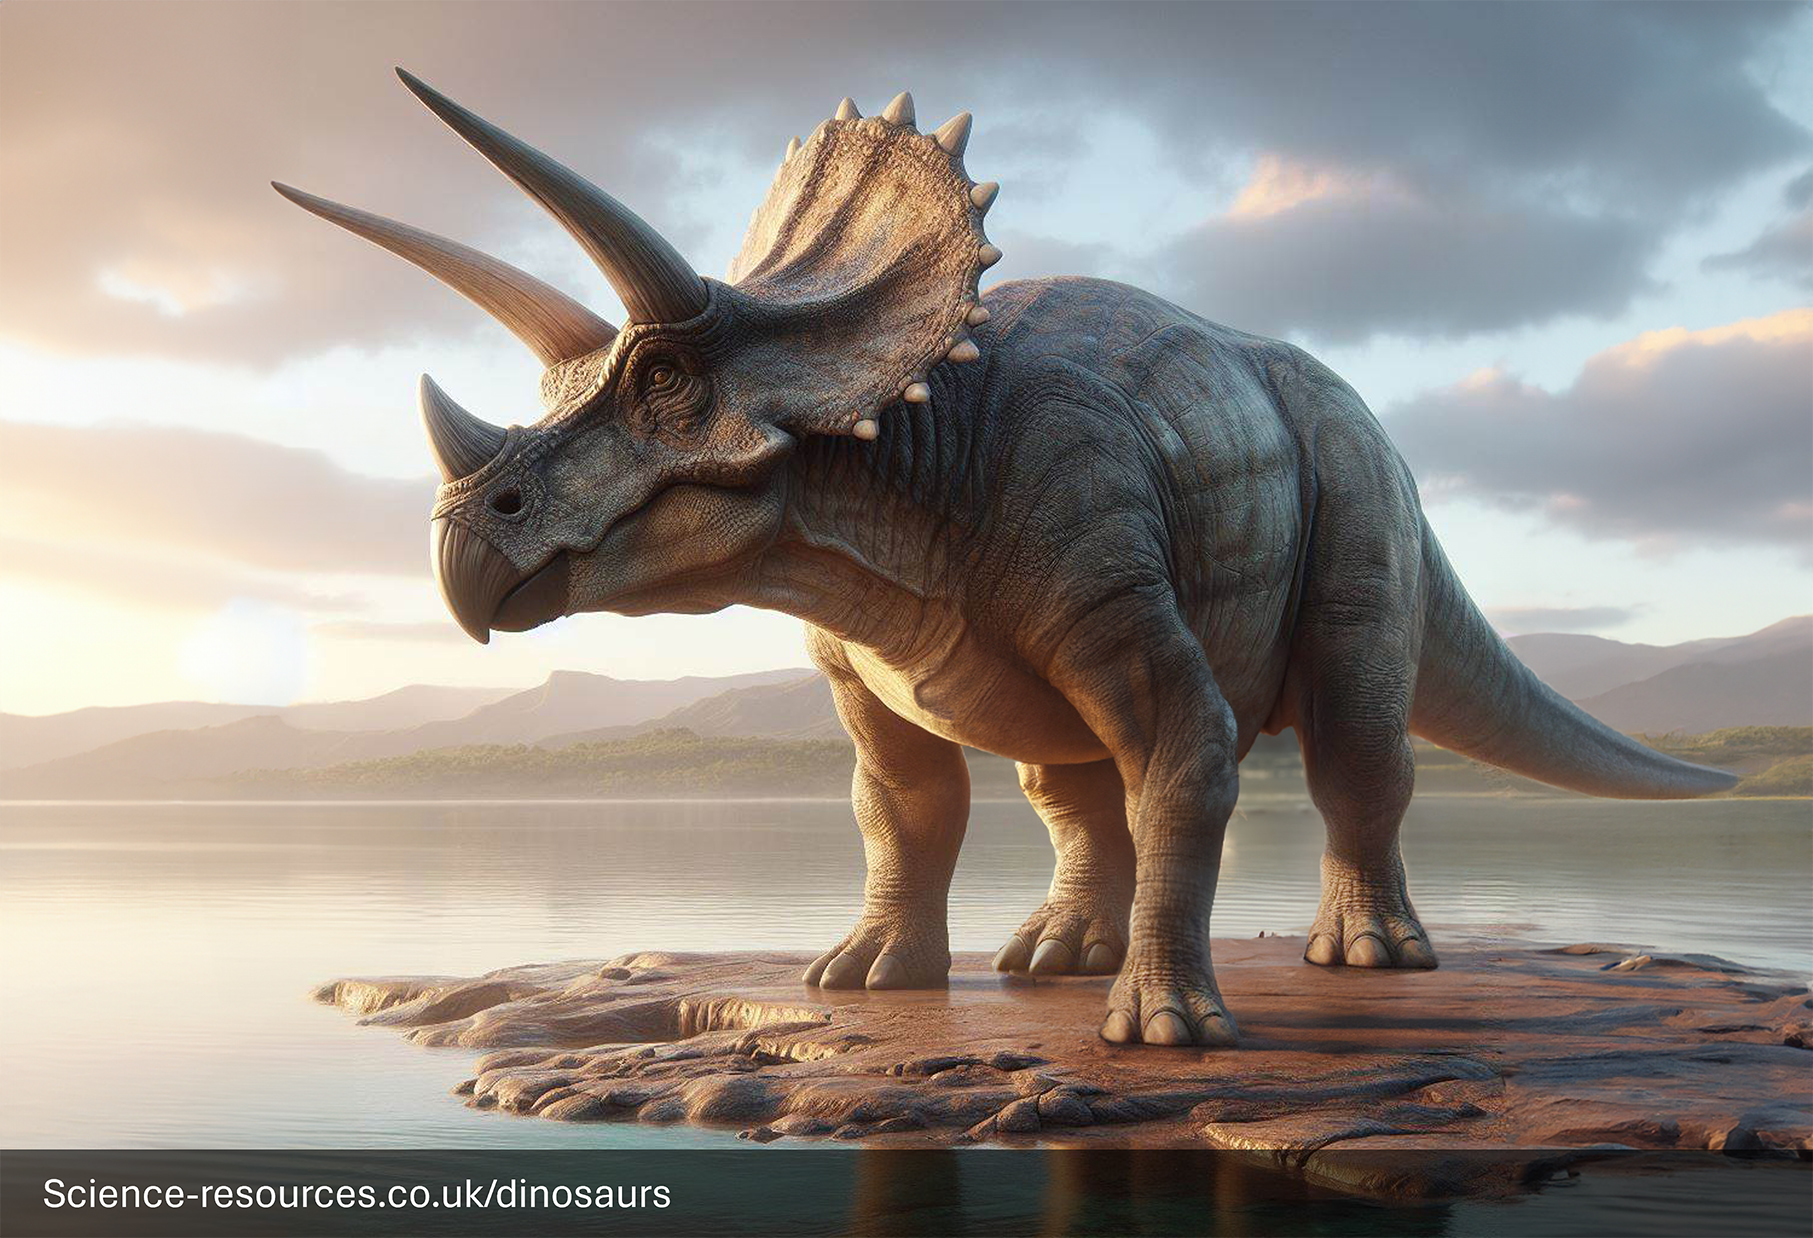 triceratops